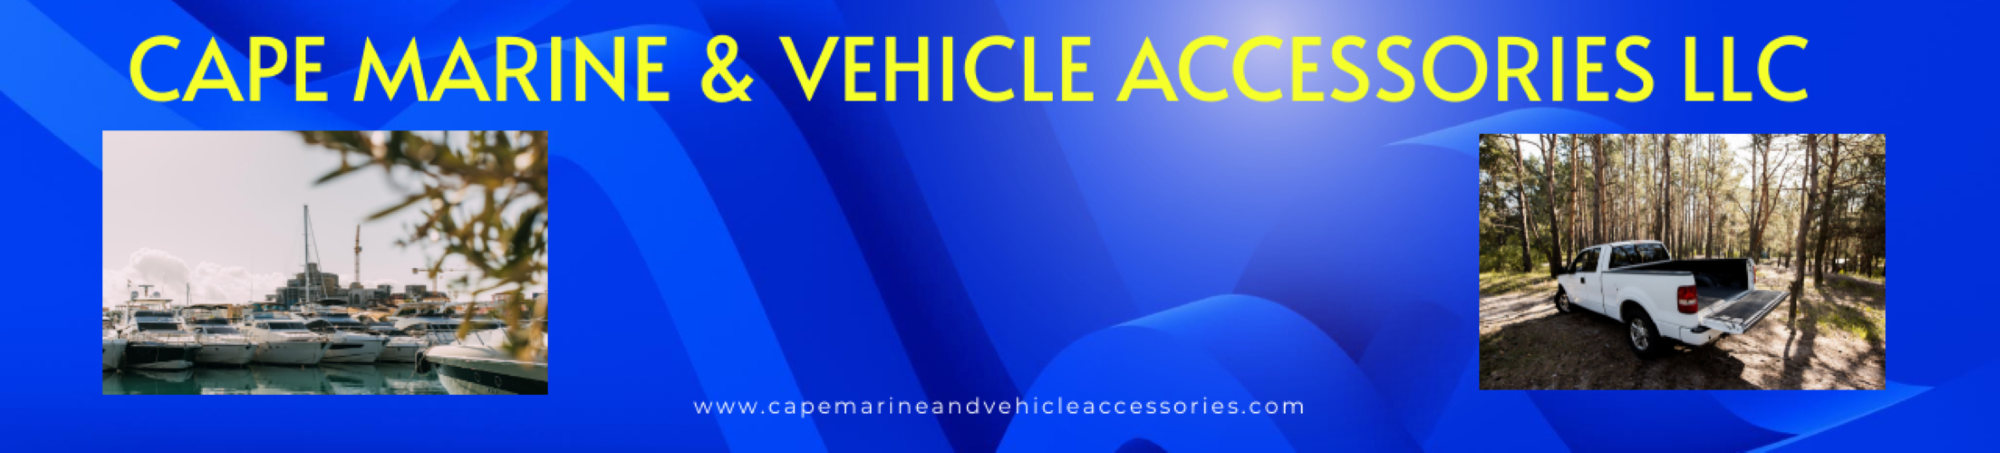 Cape Marine & Vehicle Accessories LLC